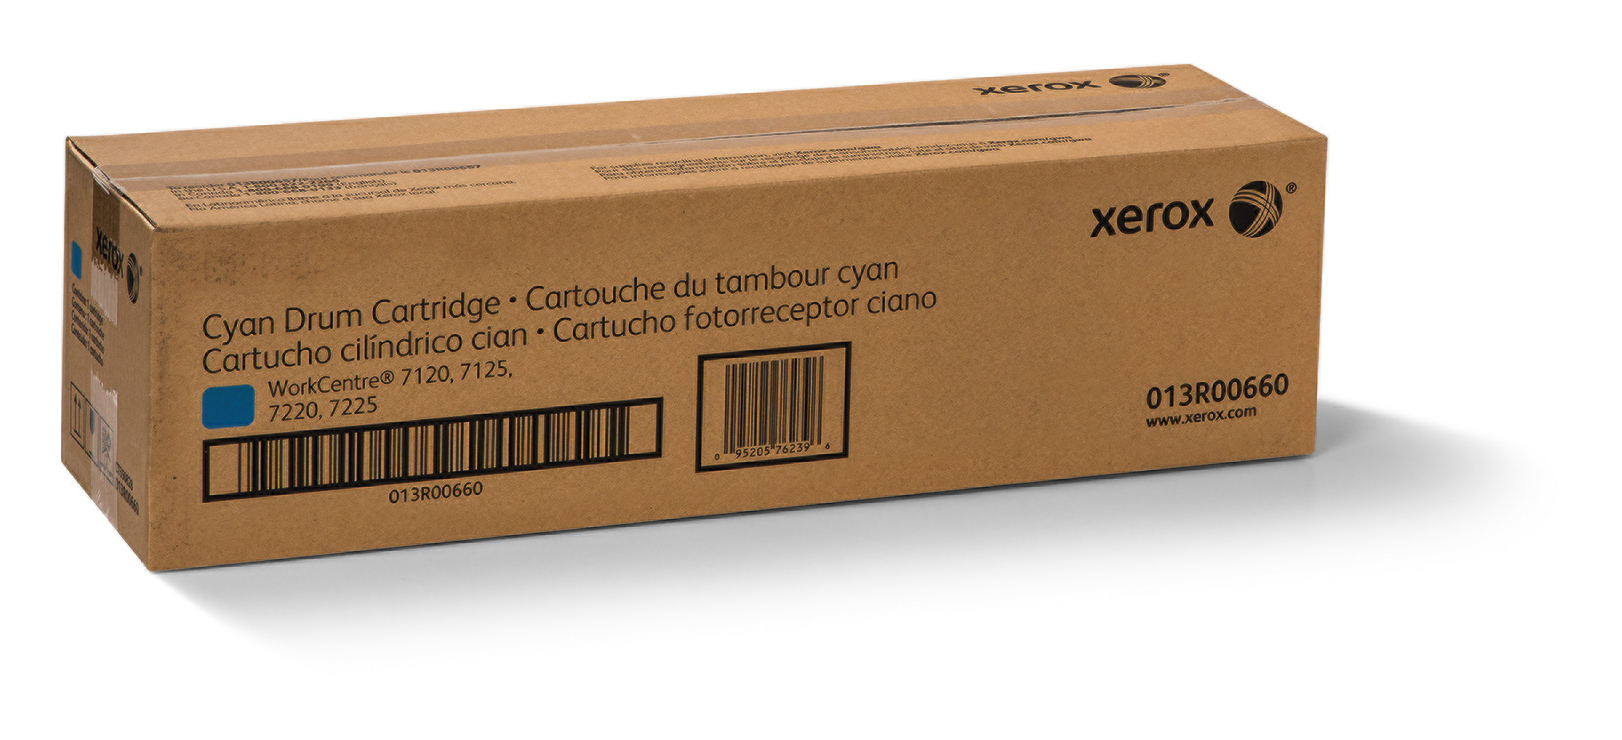 WorkCentre 7220/7225 Cyan Print Cartridge 013R00660 Genuine Xerox Supplies